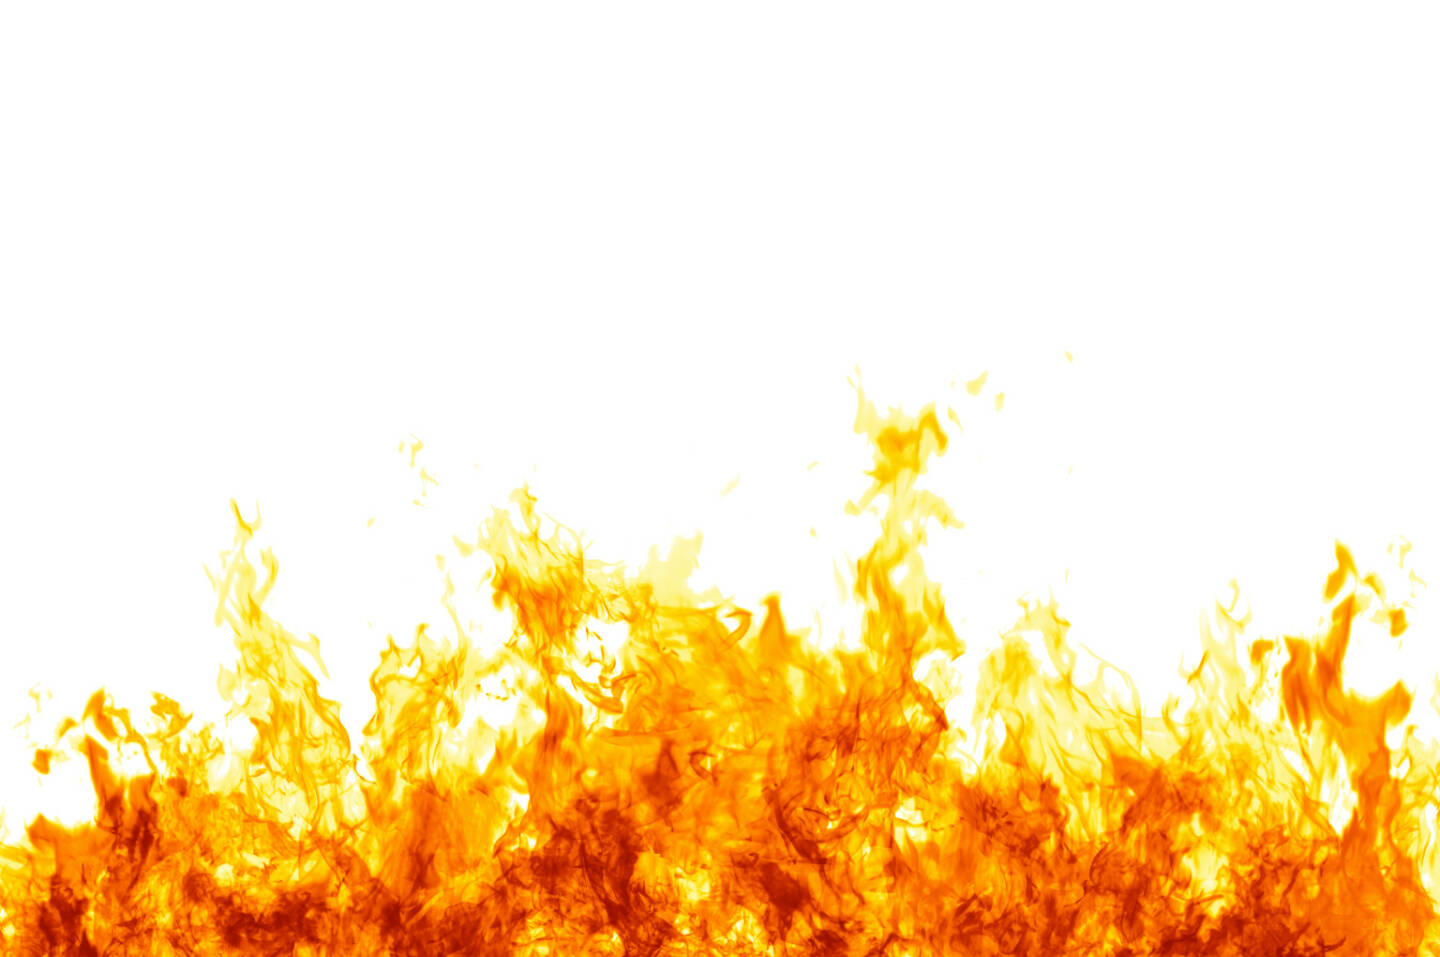 Flammen, Hitze, heiss, hot, lodern, http://www.shutterstock.com/de/pic-73018897/stock-photo-rendered-flames-on-a-white-background.html  